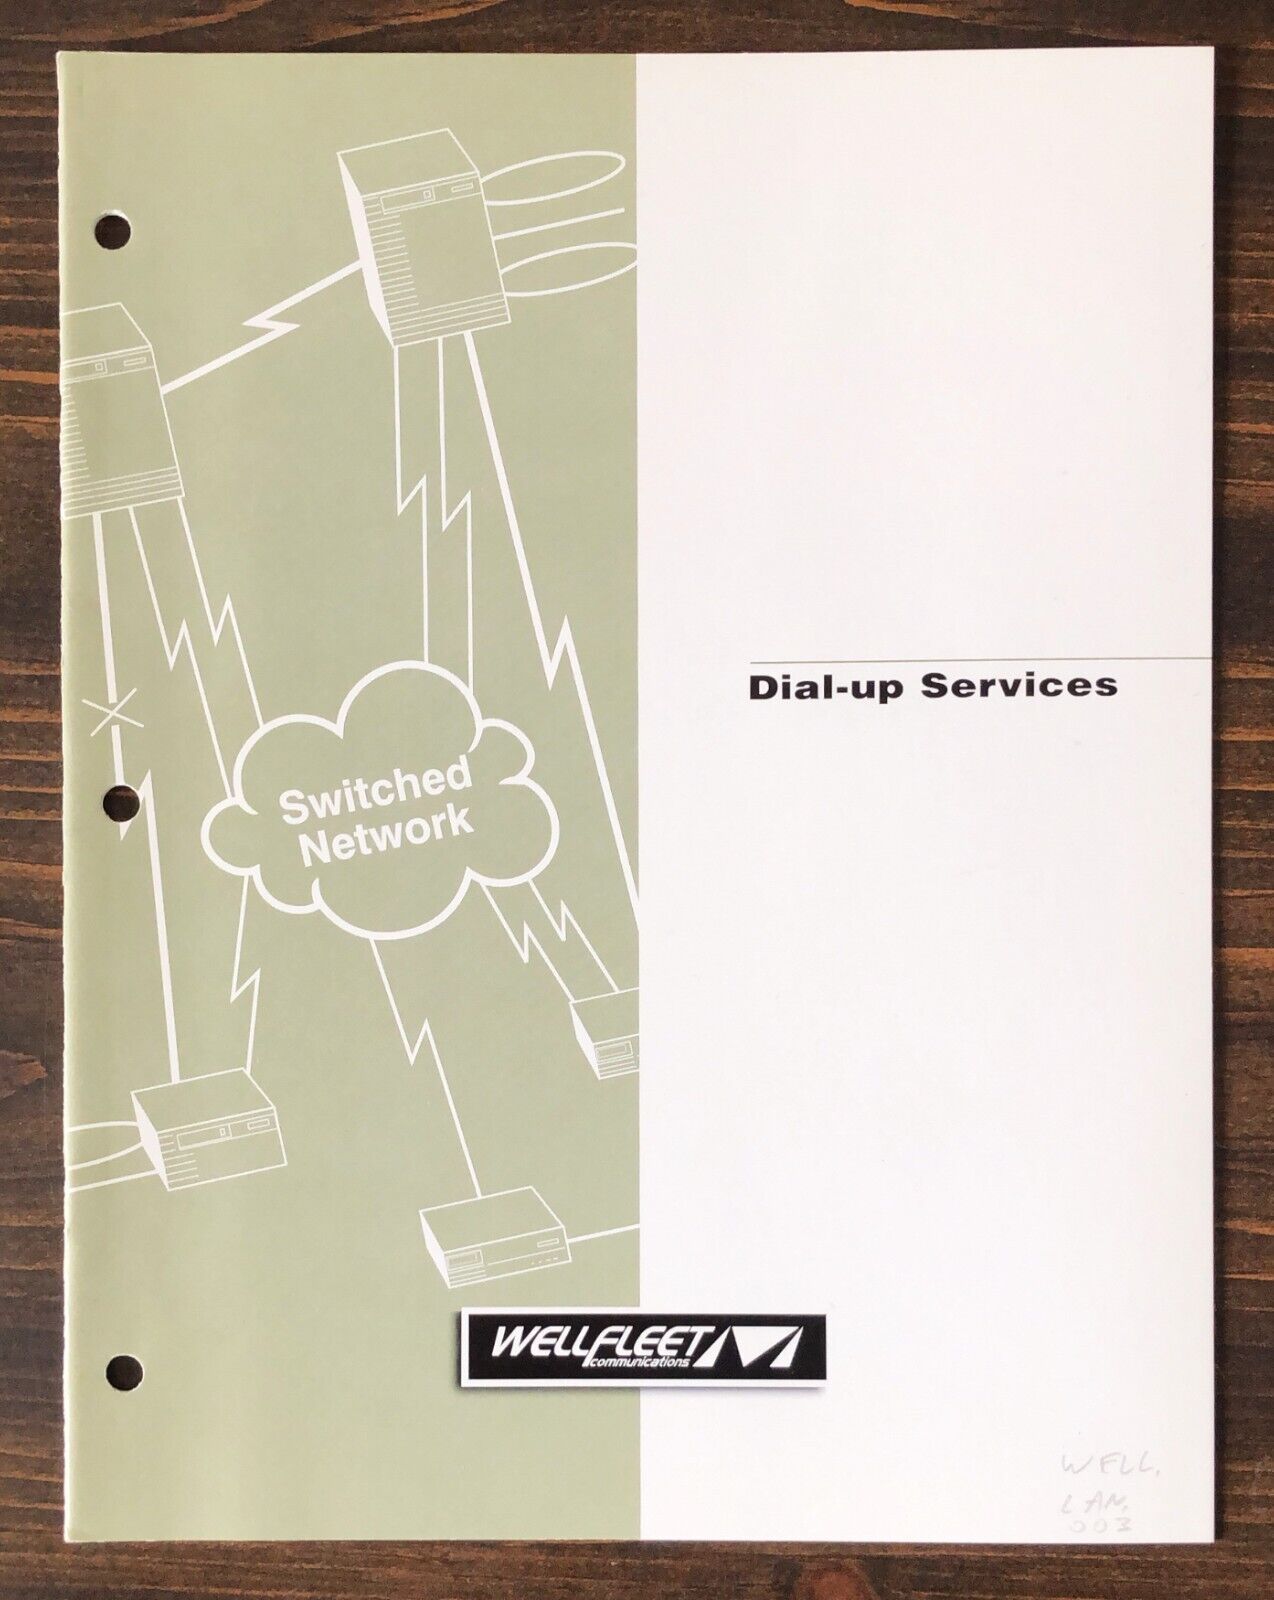 Wellfleet Communications - Dial-up Services Sales Brochure (1993)